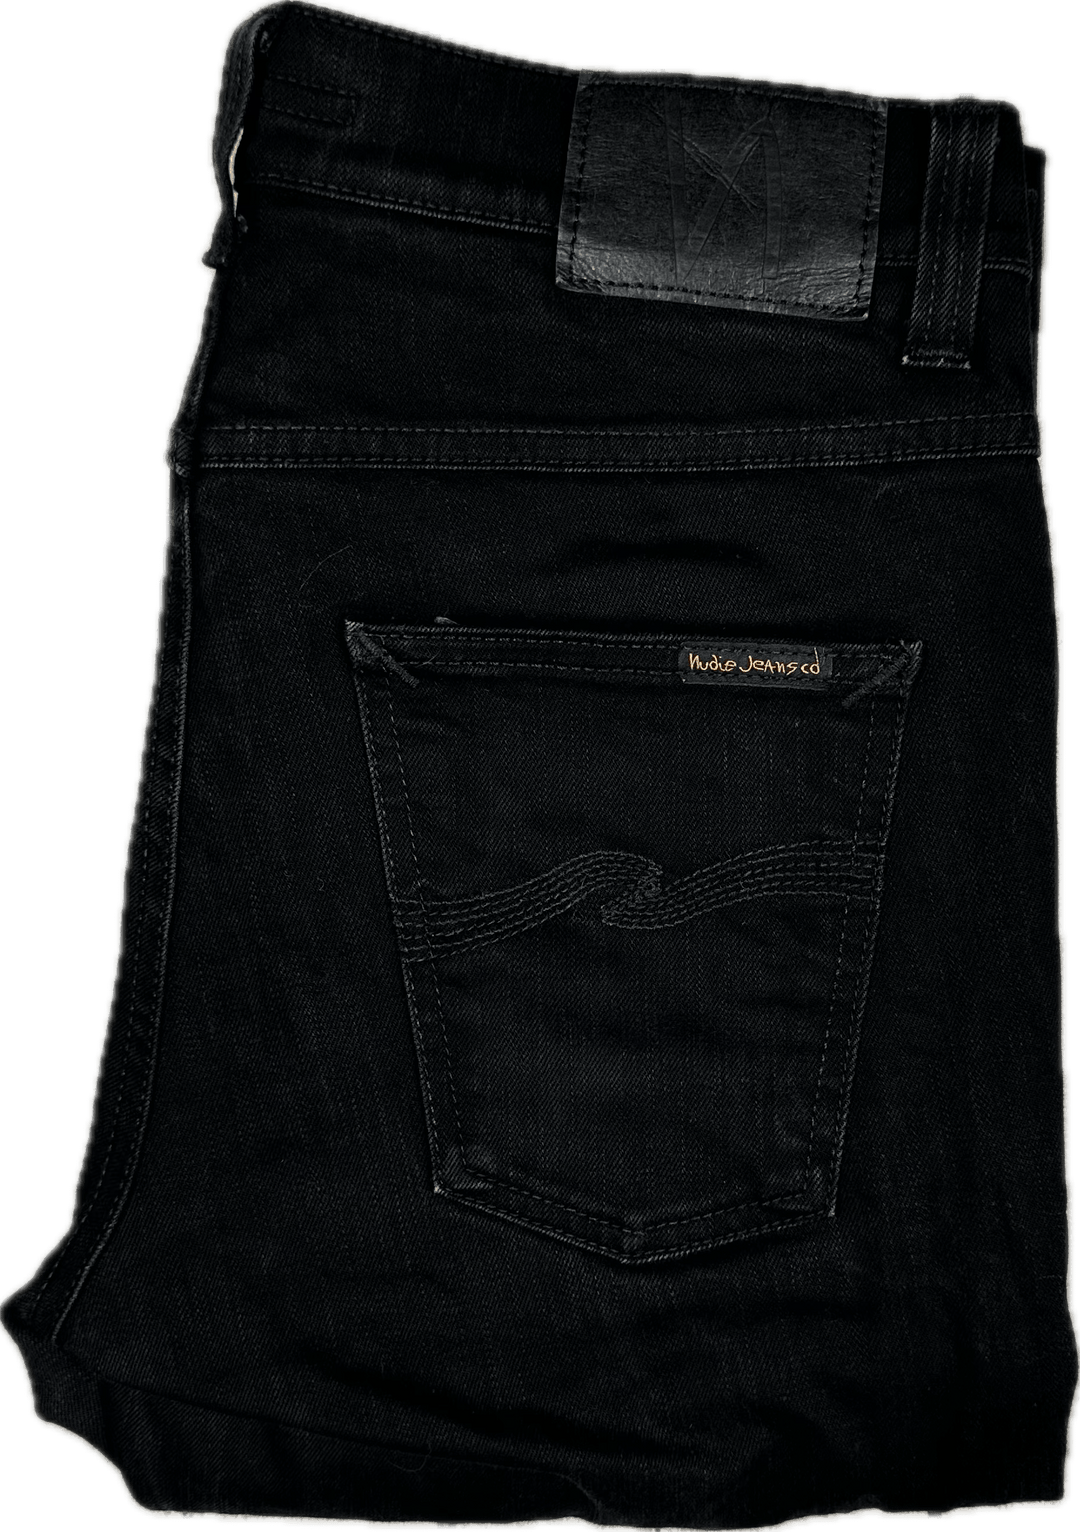 Nudie 'Lean Dean' Dry Cold Black Wash Organic Jeans- Size 30/32 - Jean Pool